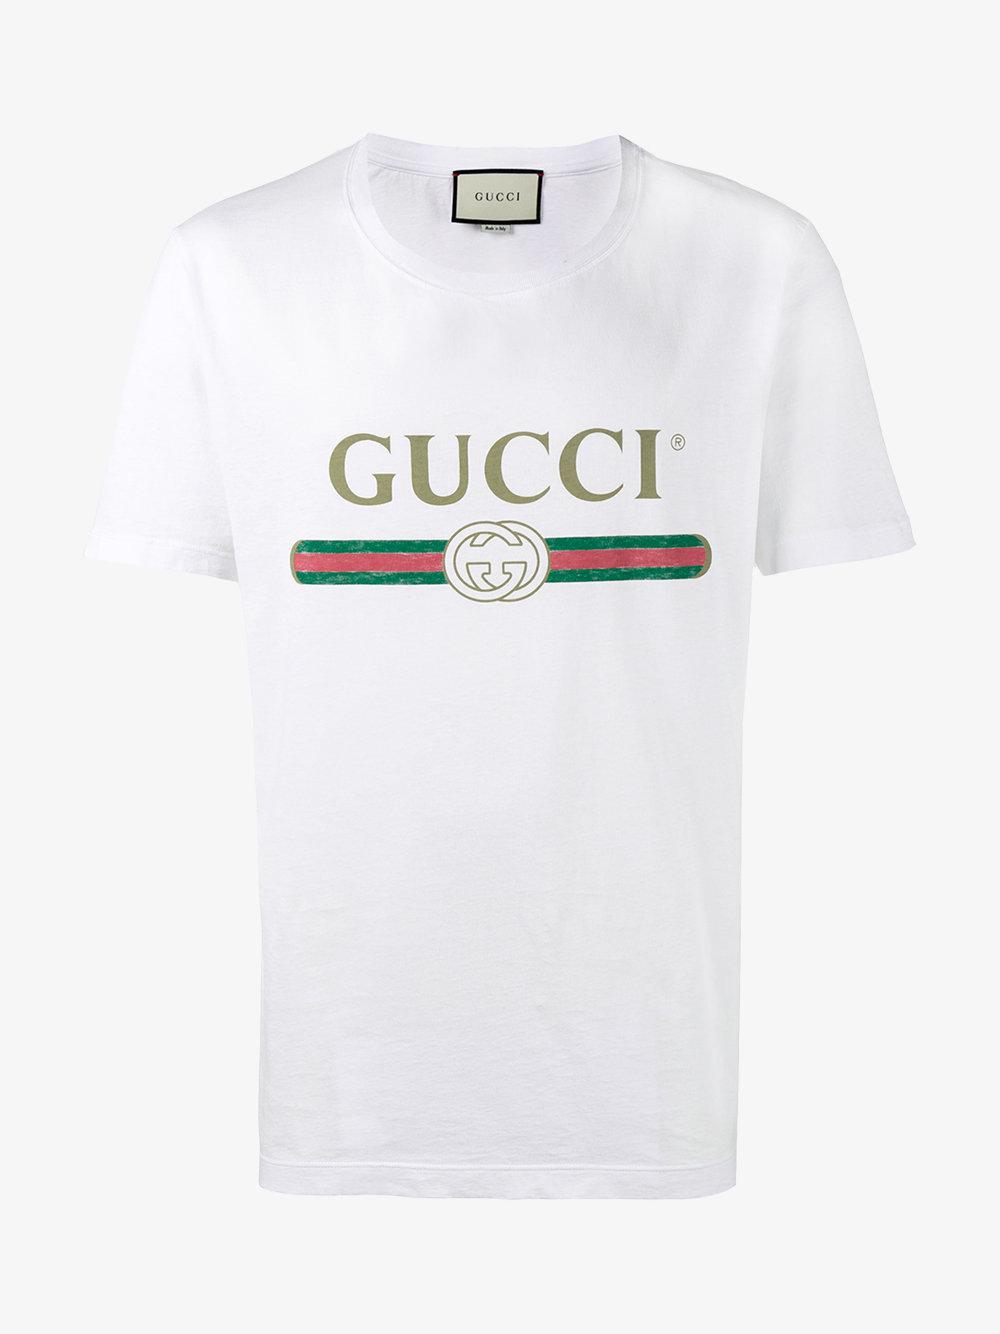 real gucci shirt price